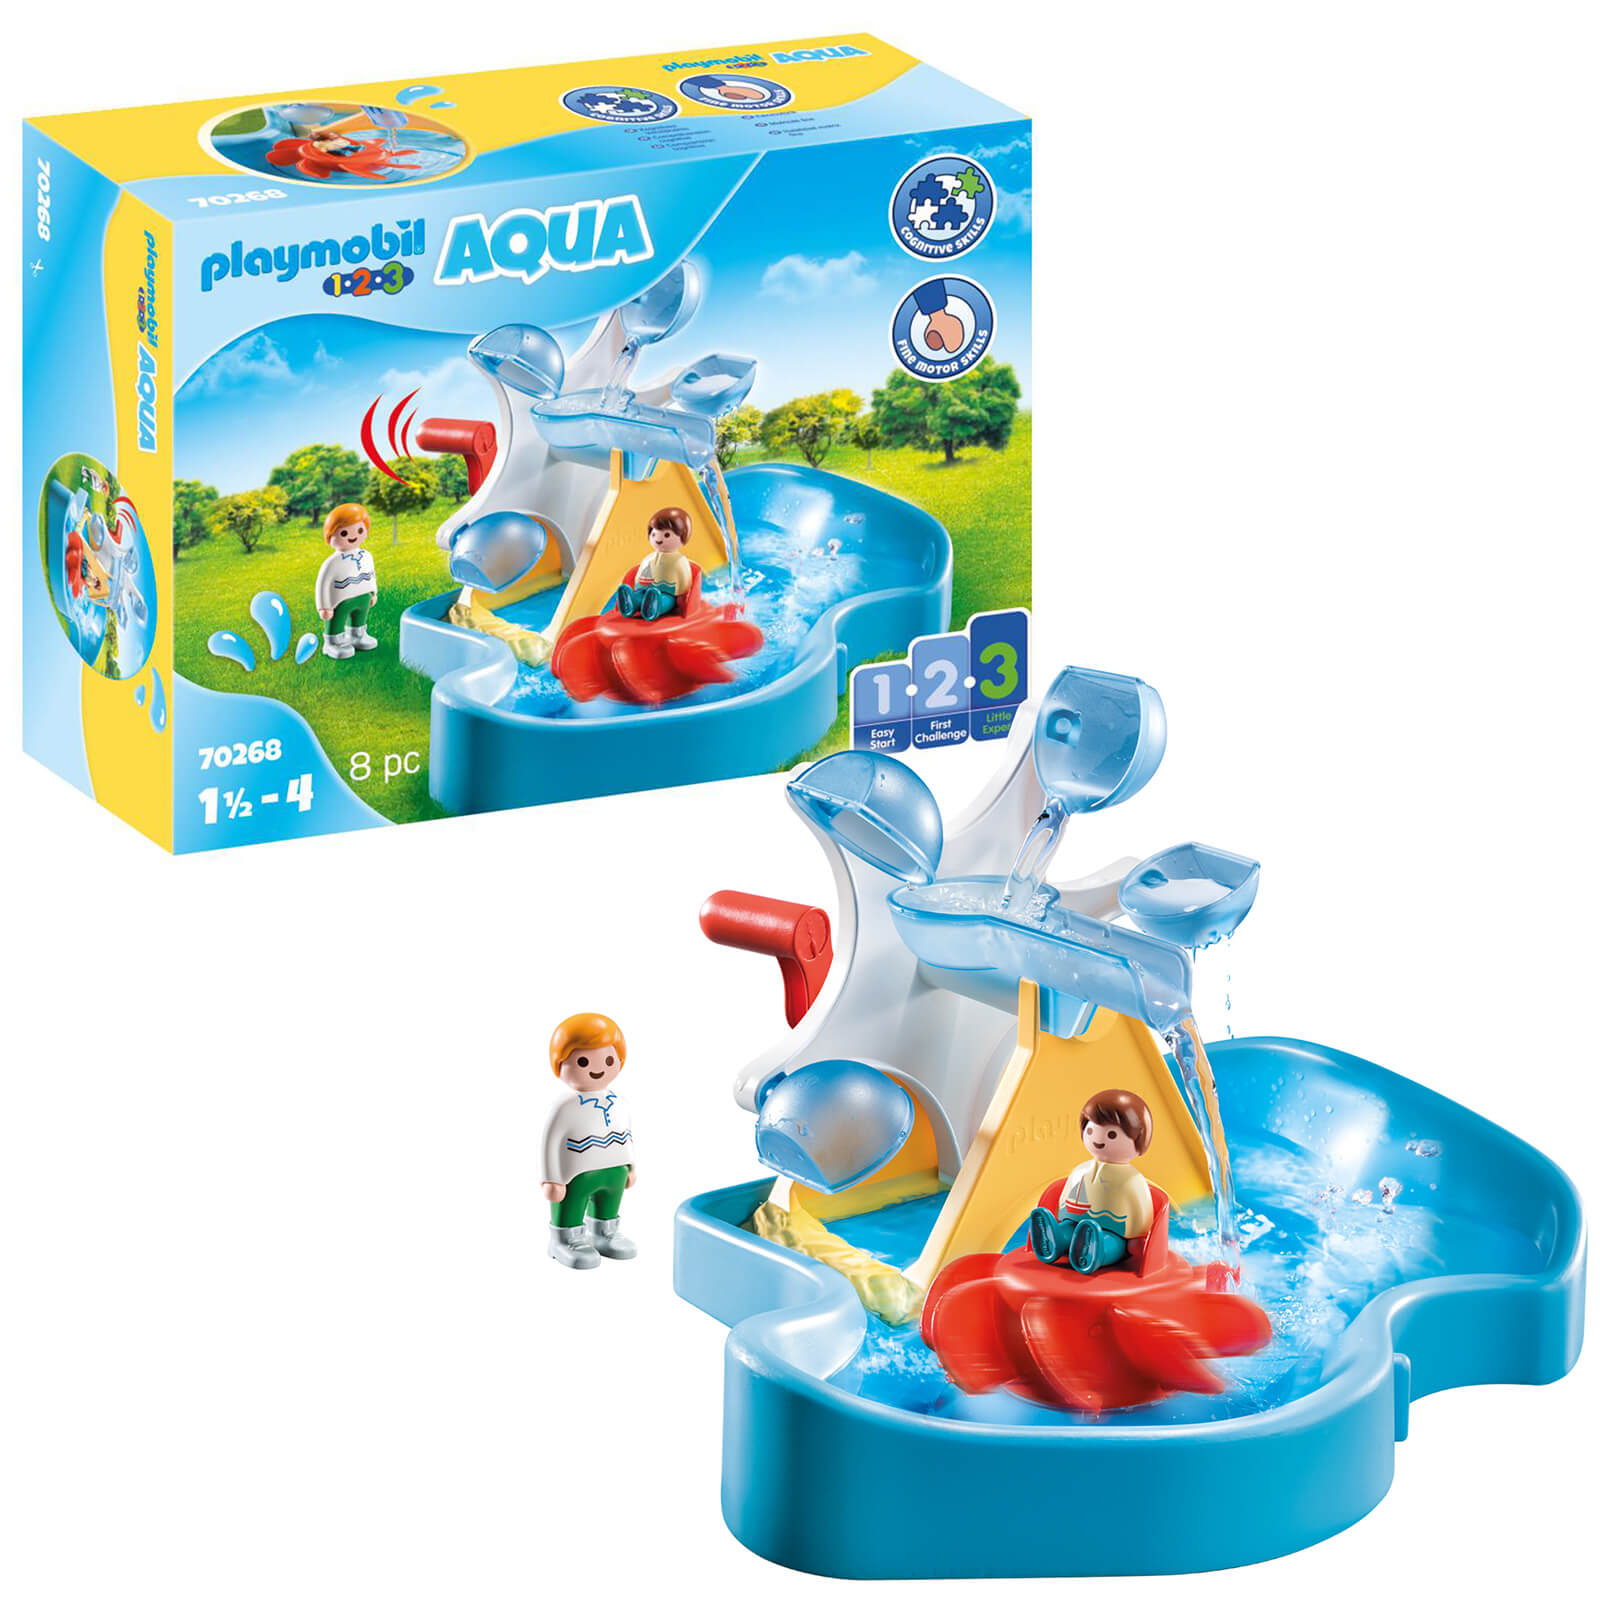 Playmobil AQUA Water Wheel Carousel For 18+ Months (70268)